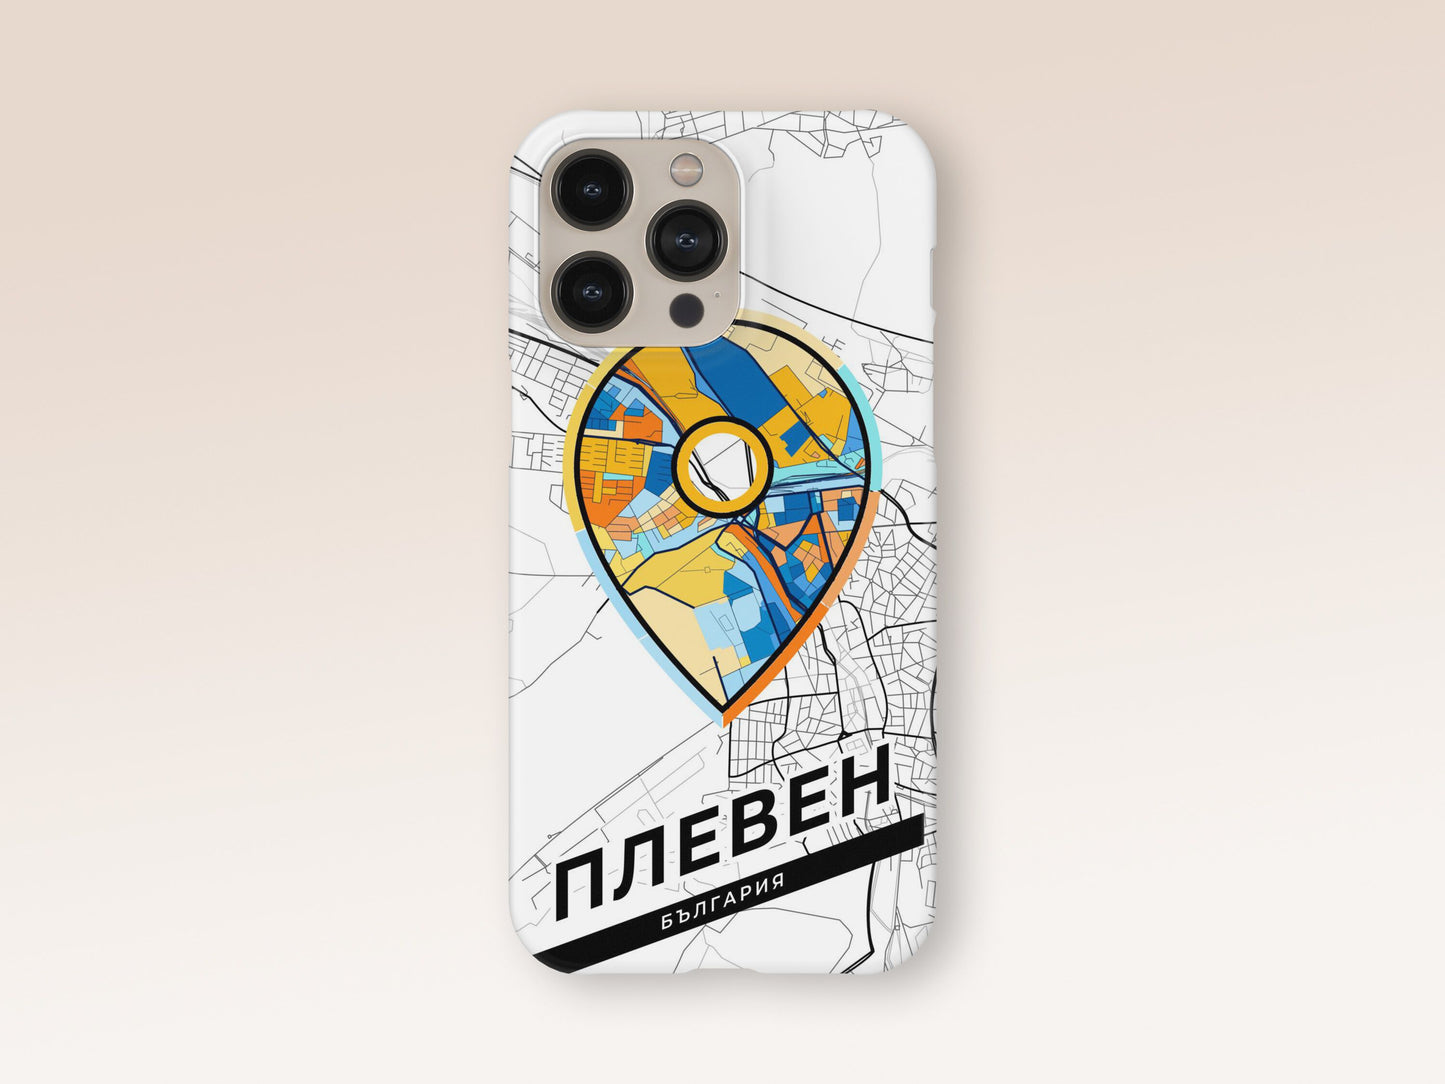 Плевен България slim phone case with colorful icon. Birthday, wedding or housewarming gift. Couple match cases. 1